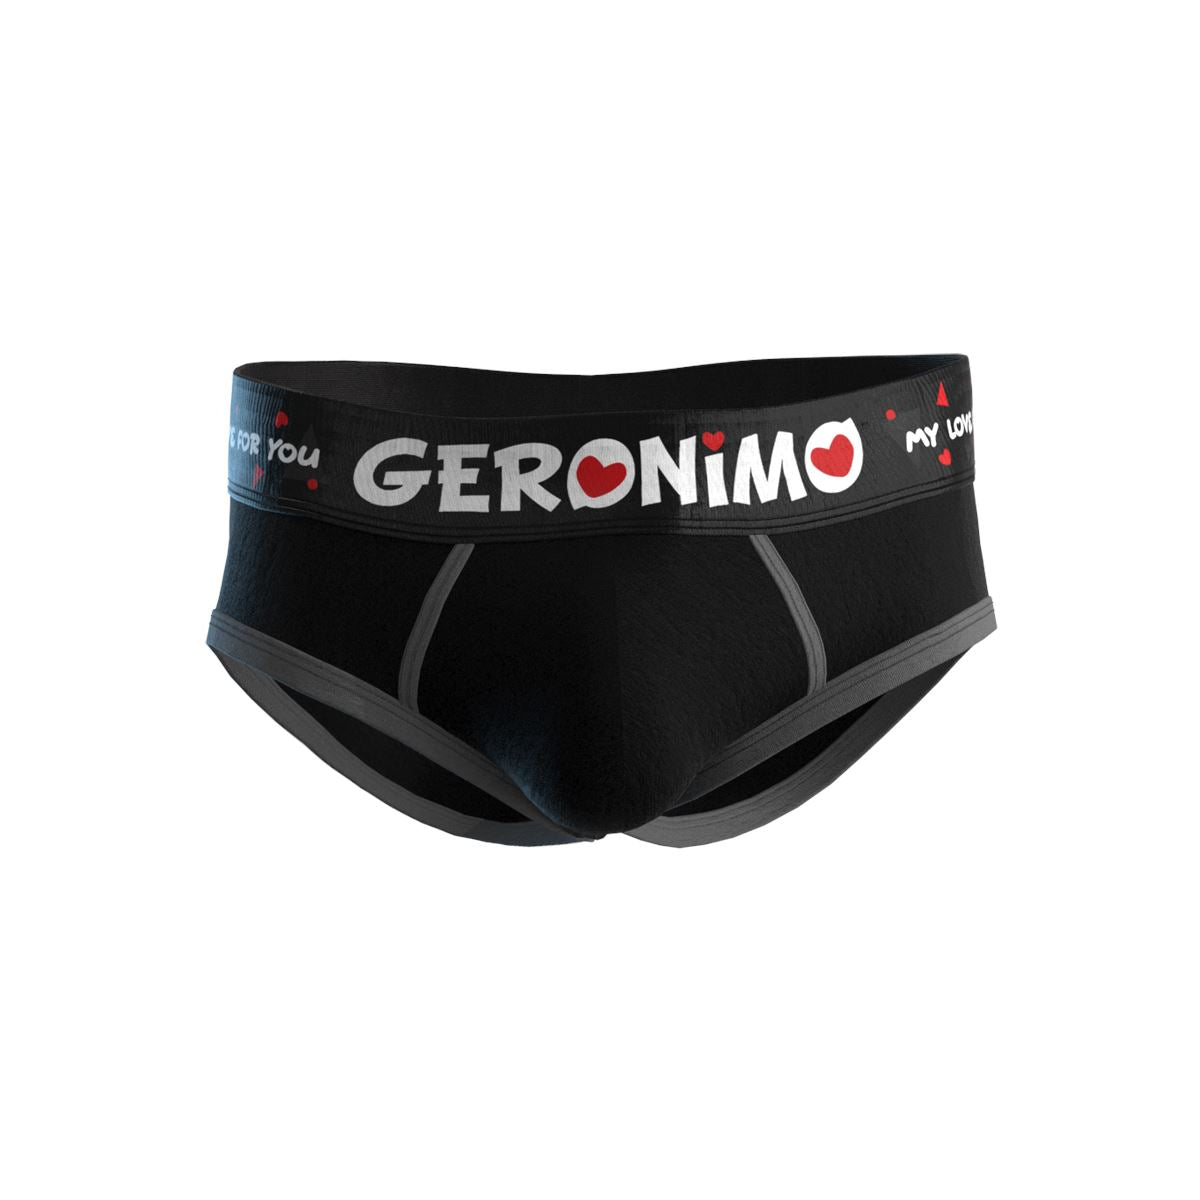 Geronimo 1861s2 Yellow Brief for Men, Underwear - Briefs, Fashion clothing  online store